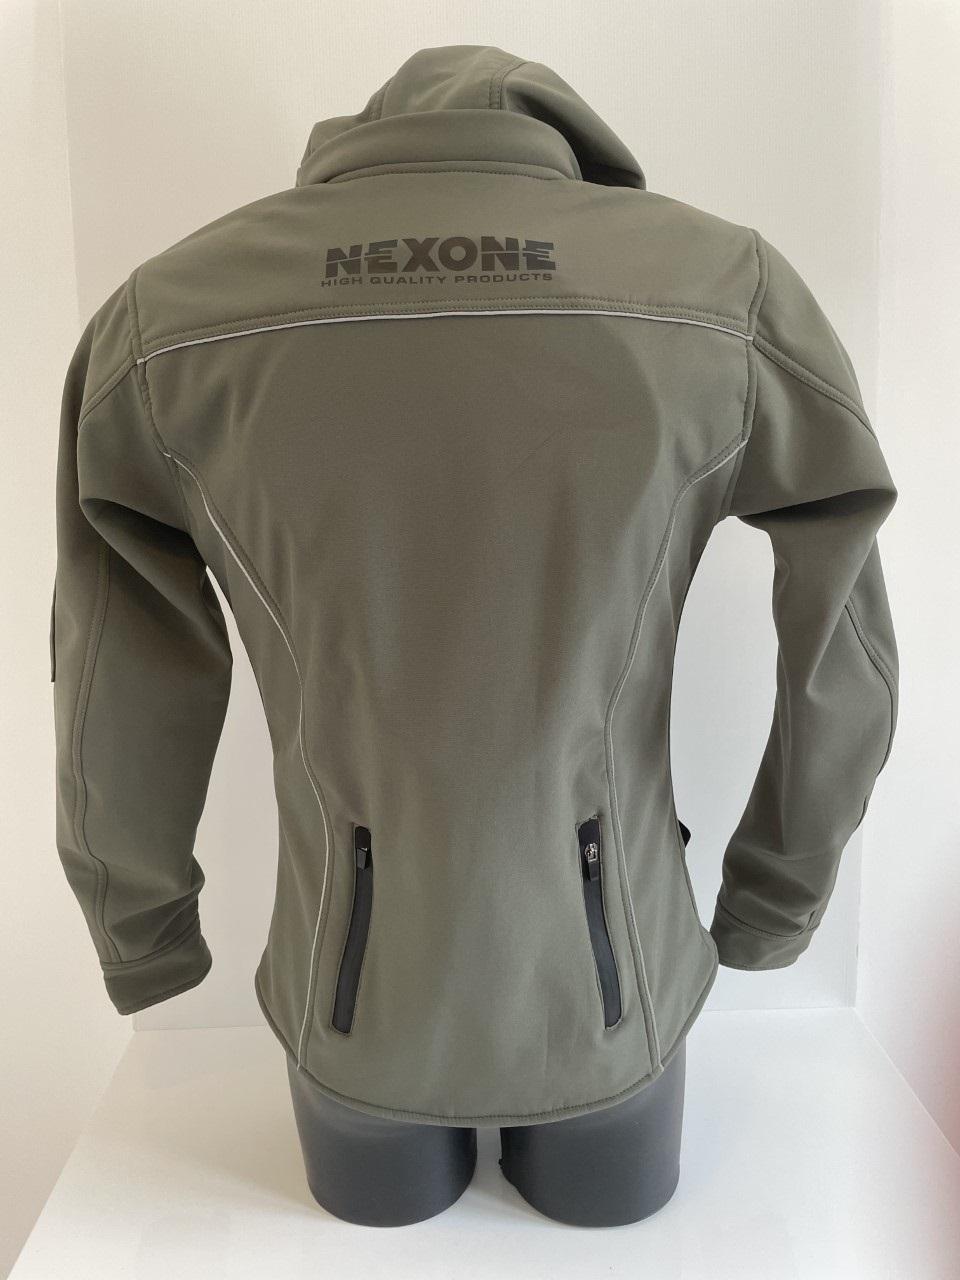 Blouson veste pour moto Femme Nexone Soft-Shell kaki Taille S Lady homologué CE